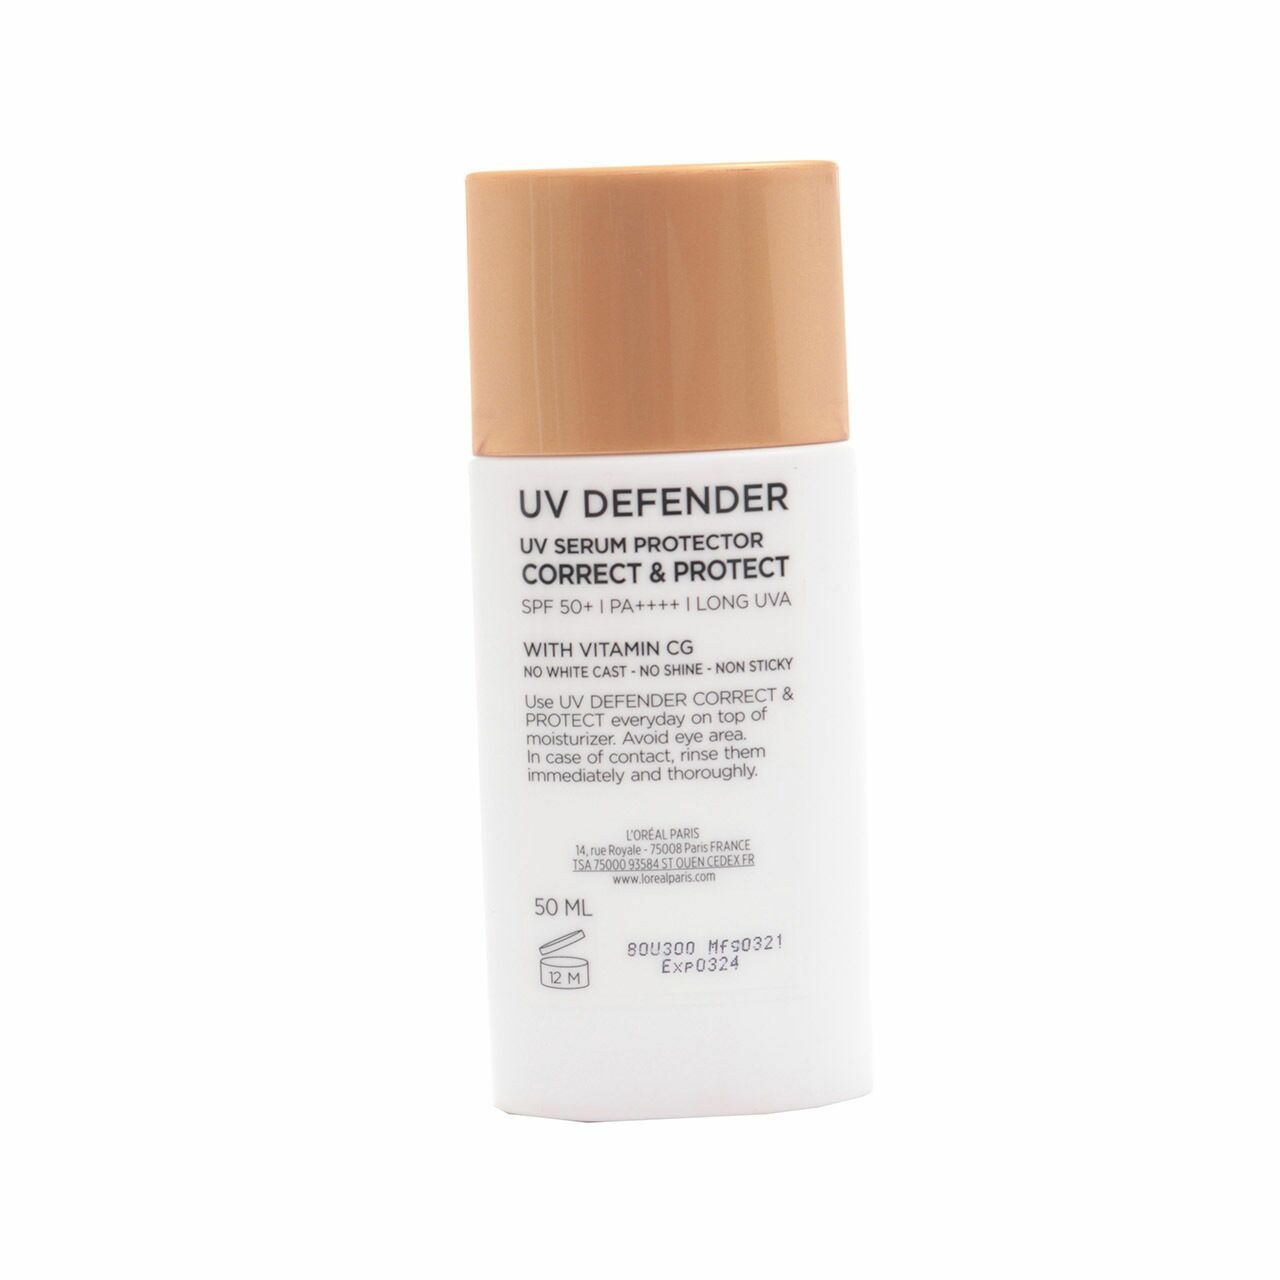 L'Oreal UV Defender Correct & Protect Faces